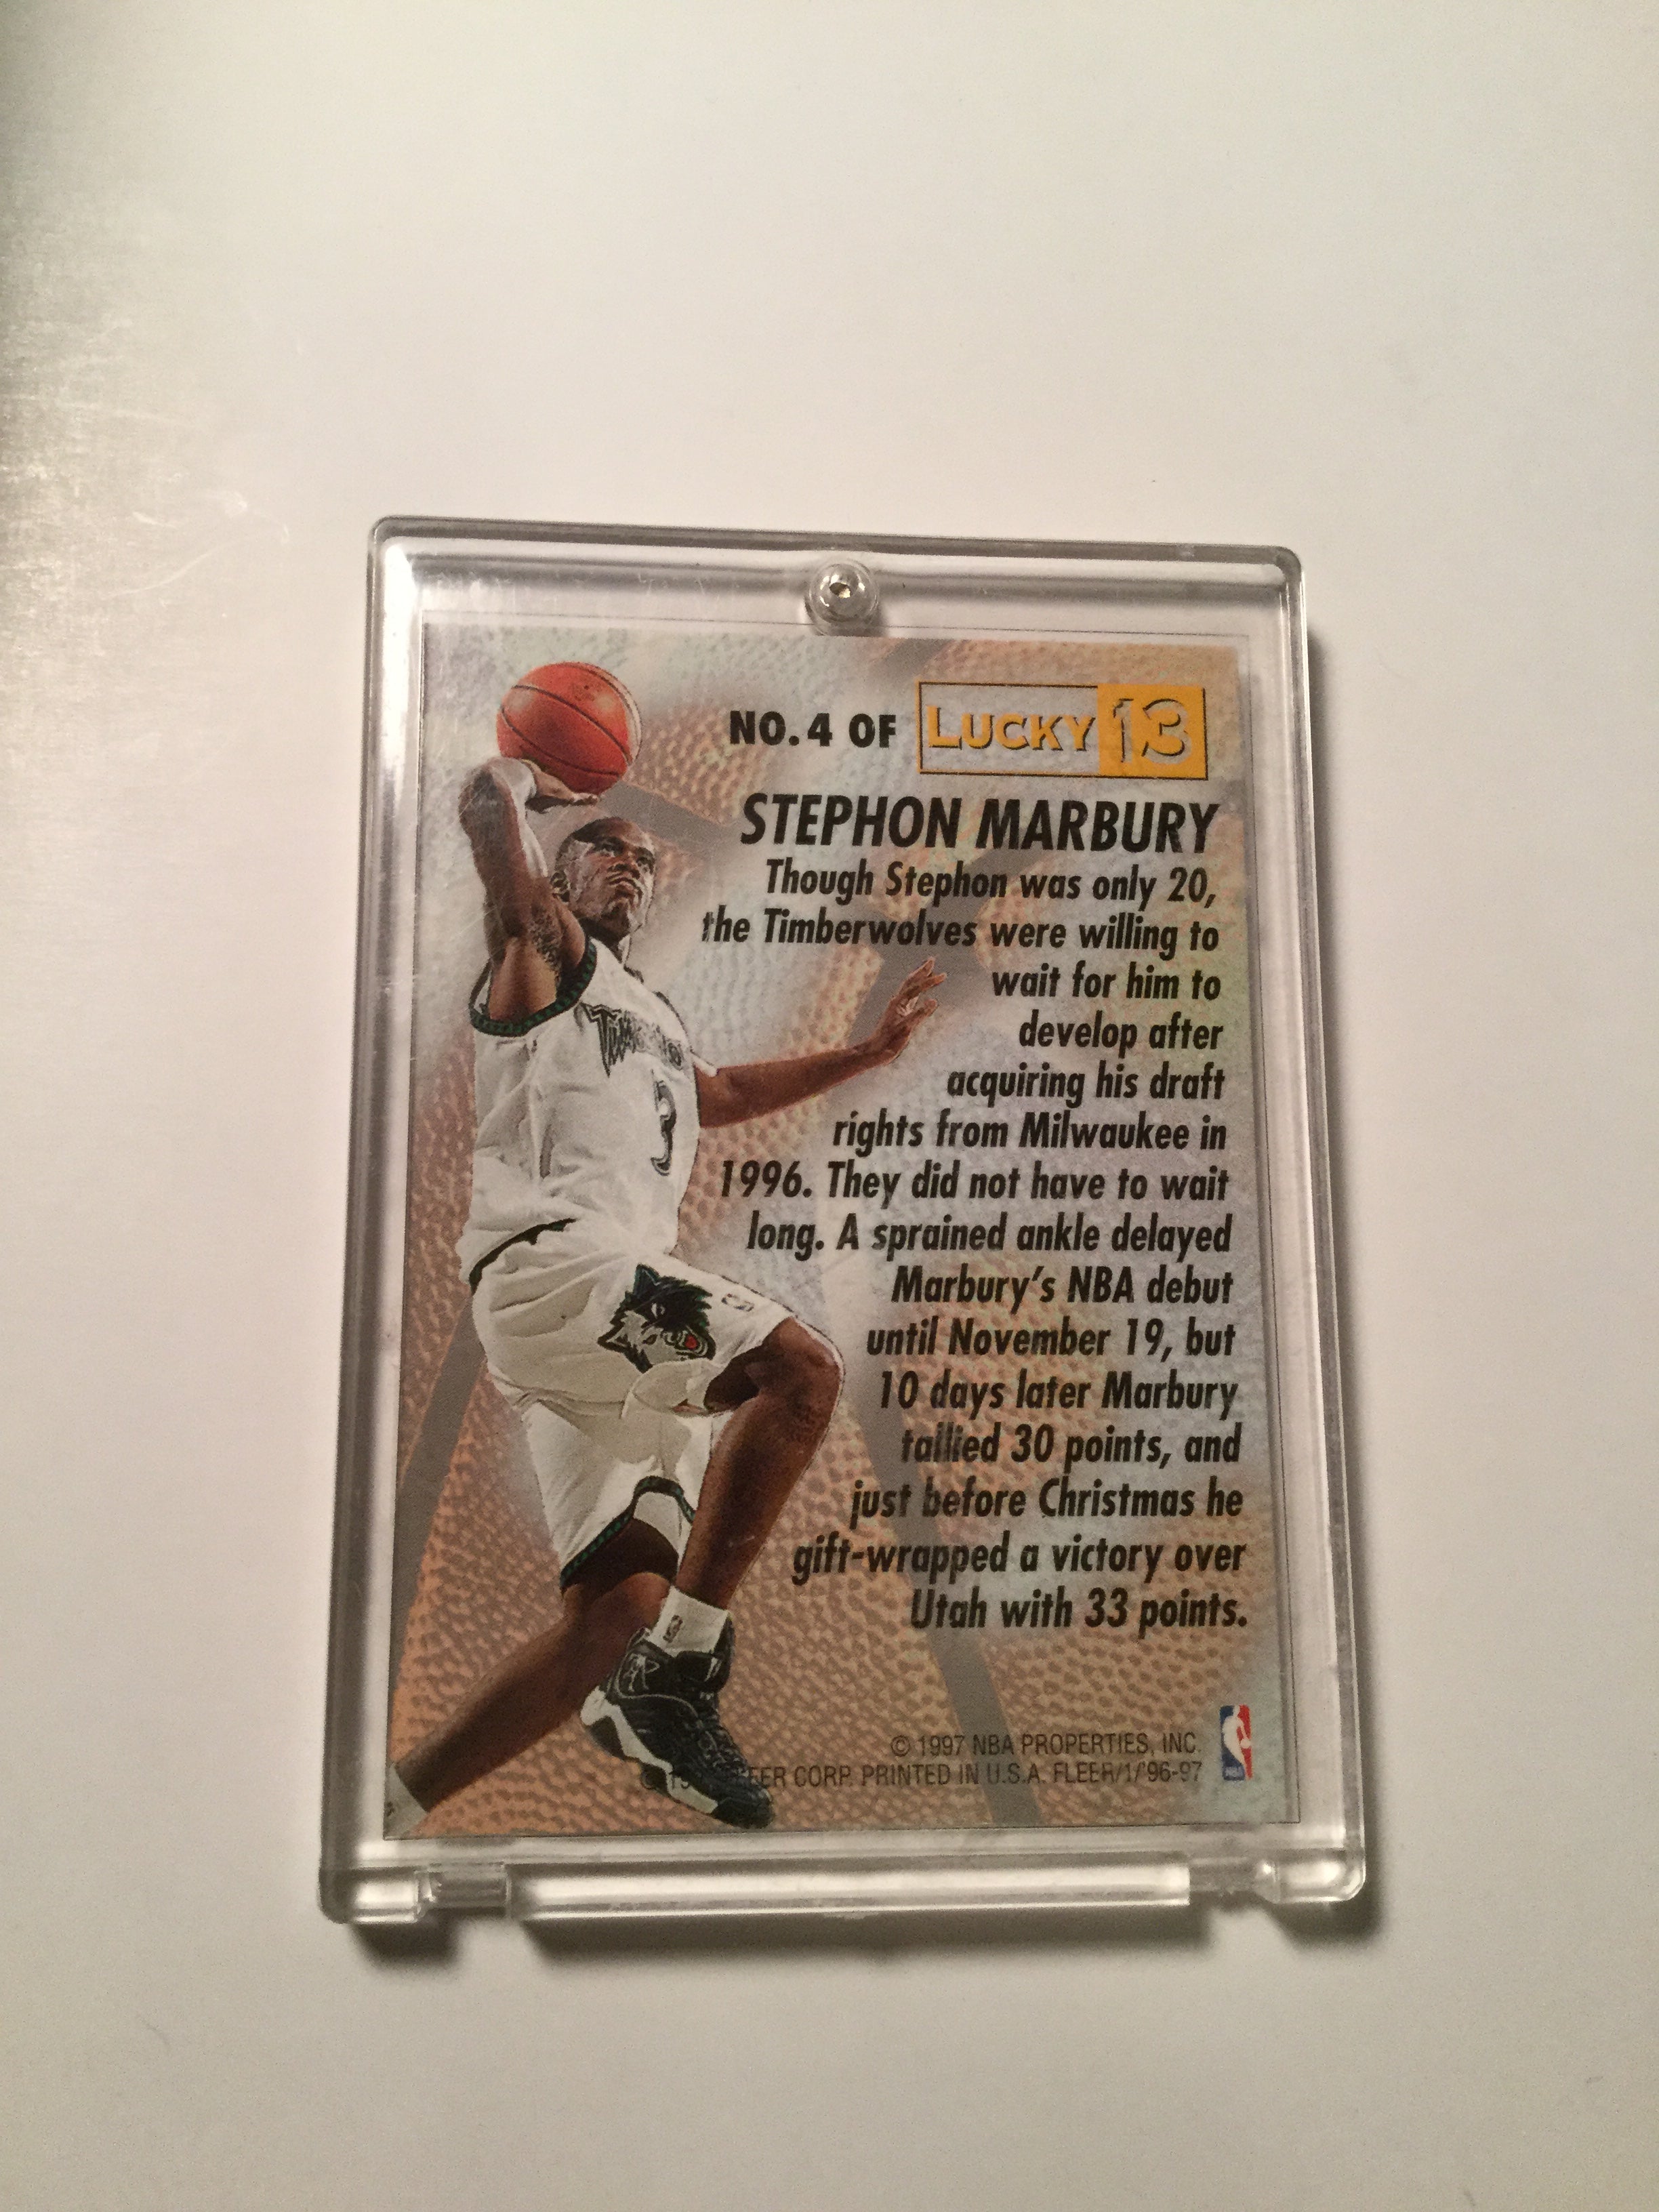 Stephon Marbury Fleer Rare rookie redemption NBA card